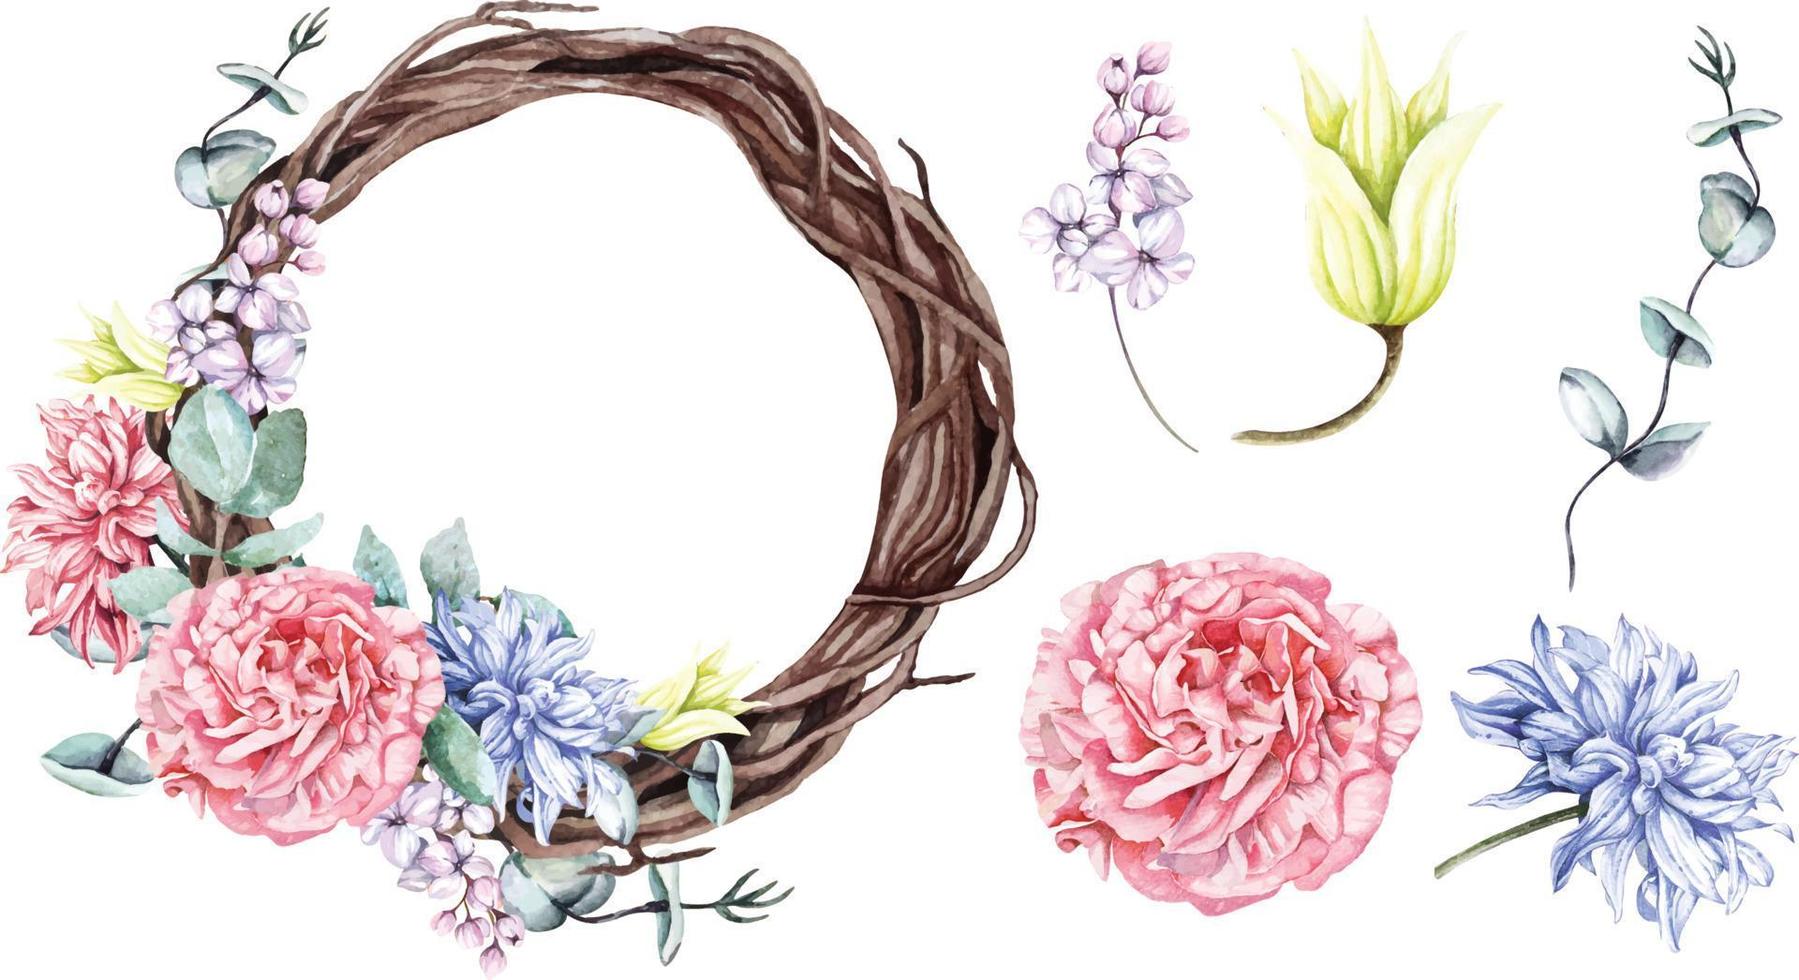 corona de flores y enredaderas pintadas en acuarela.flora para invitación, boda o tarjetas de felicitación. vector